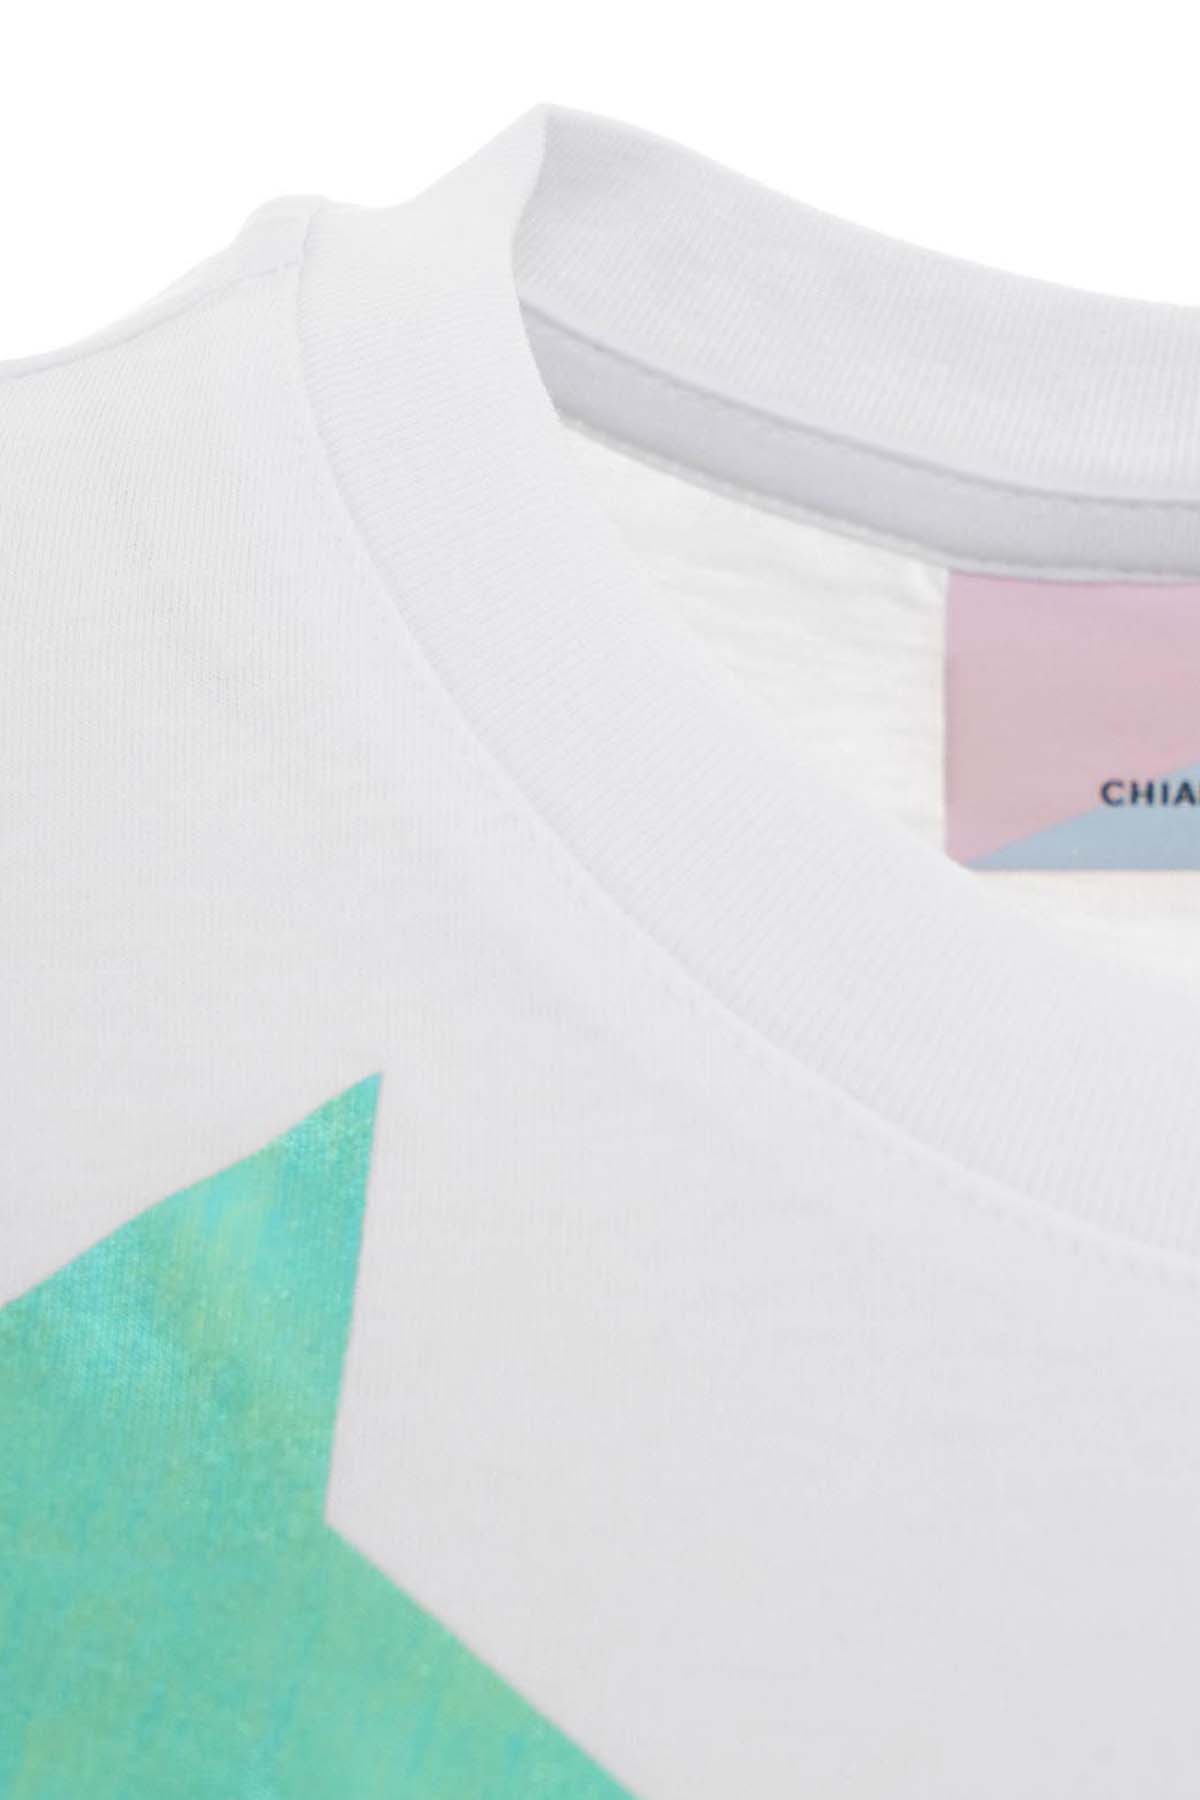 Chiara Ferragni Yıldızlı Yuvarlak Yaka T-shirt-Libas Trendy Fashion Store